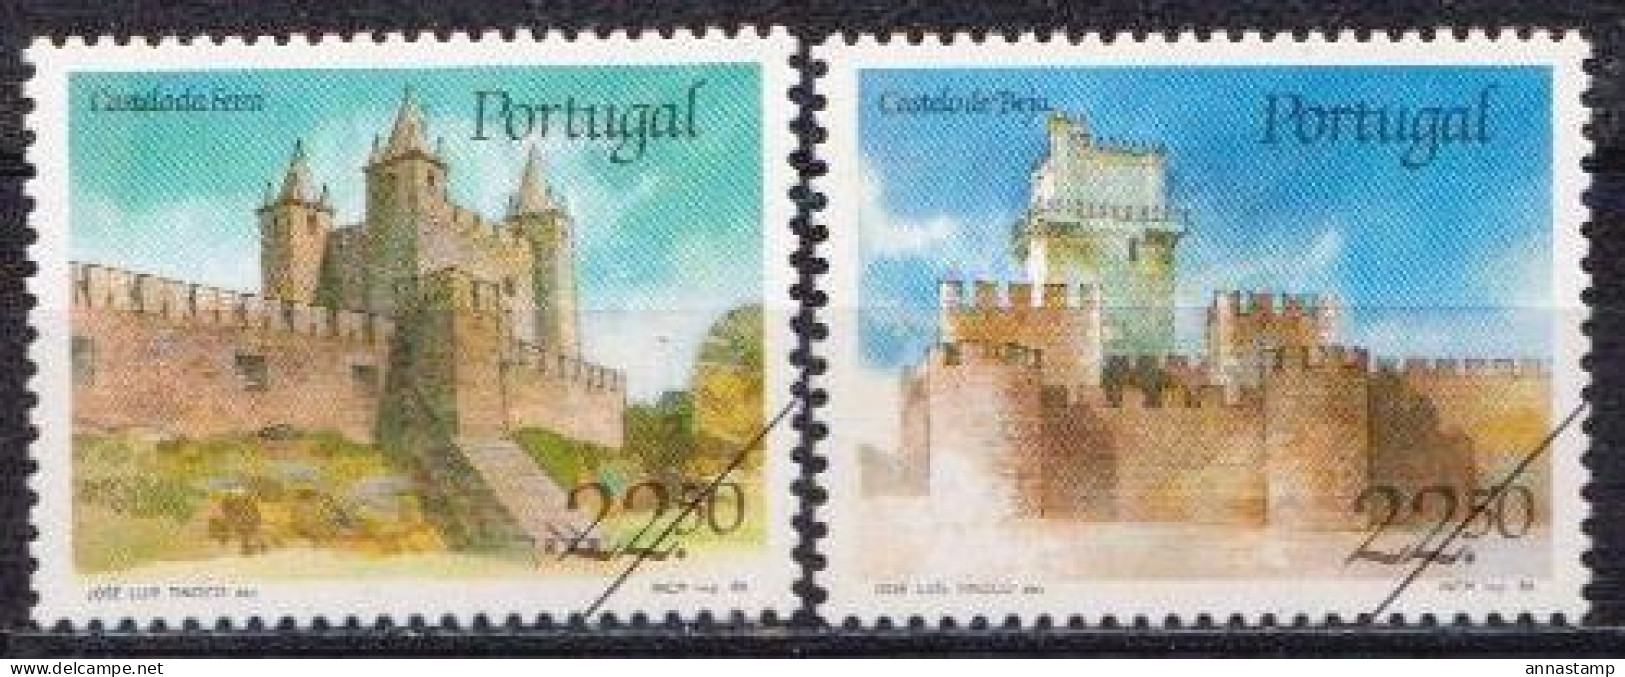 Portugal MNH Stamps, SPECIMEN - Châteaux